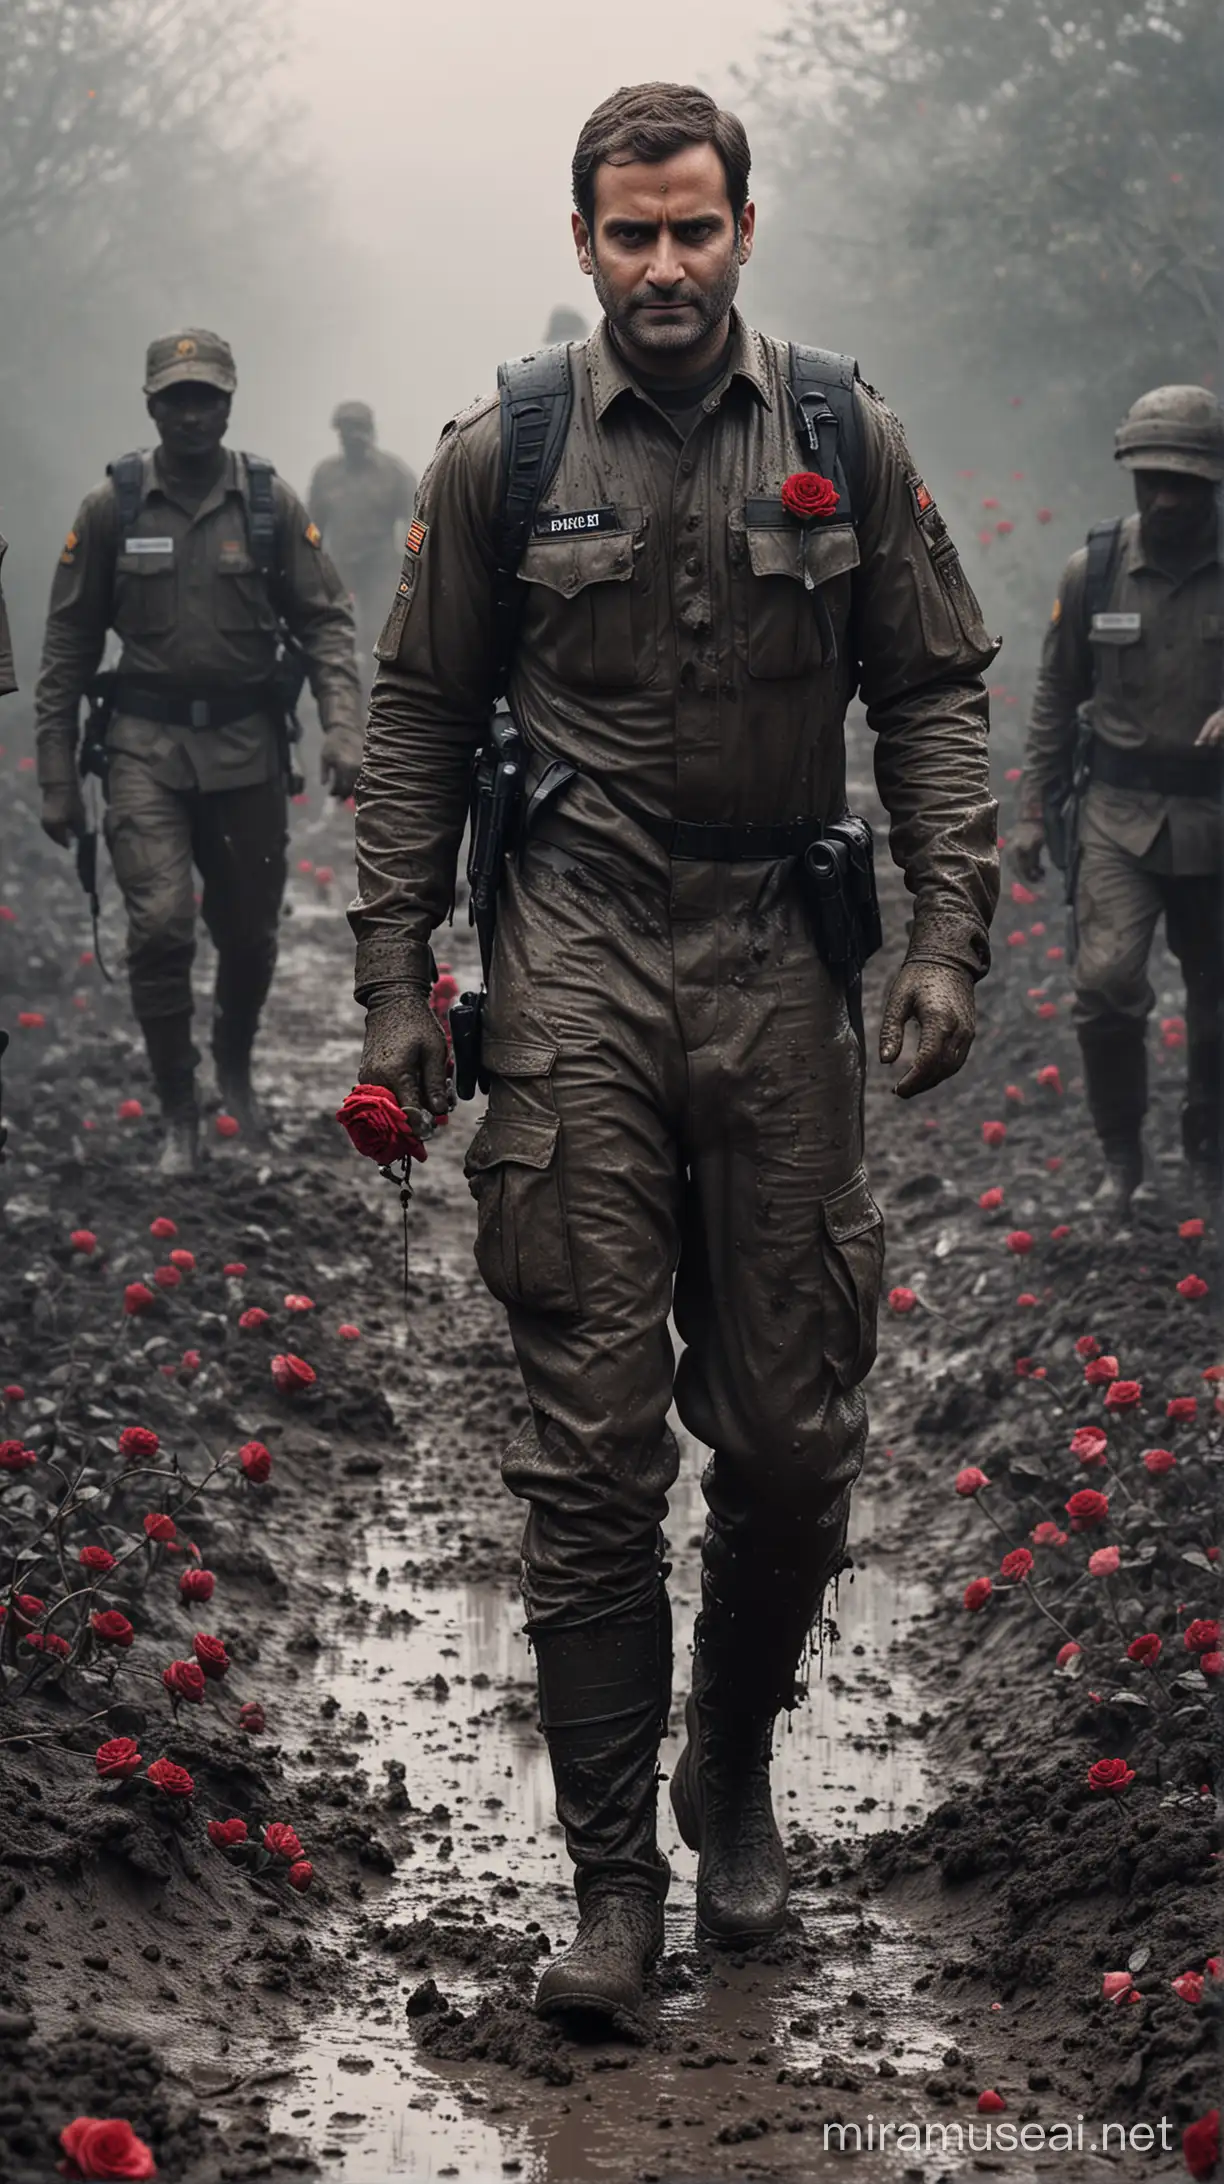 Rahul Gandhi in HyperRealistic MudCovered Military Uniform with Roses Amidst Dark Foggy Atmosphere